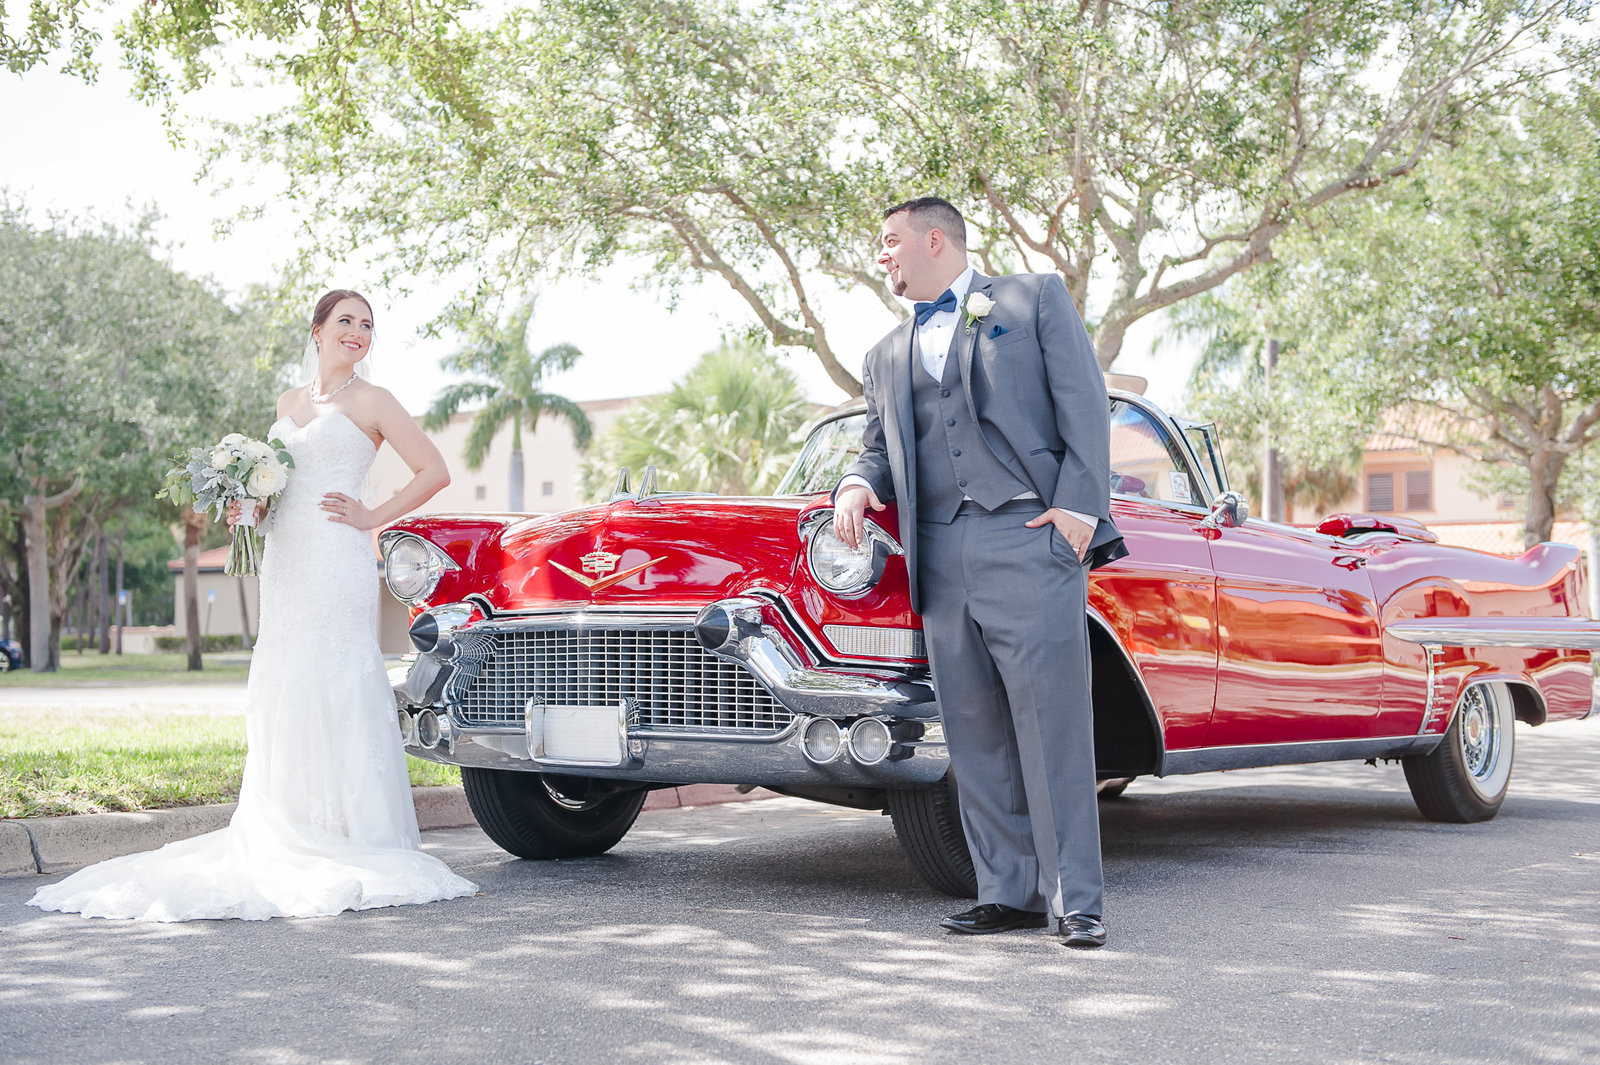 Red Classic Car Wedding - Country Club at Mirasol Wedding - Palm Beach Wedding Photography by Palm Beach Photography, Inc.